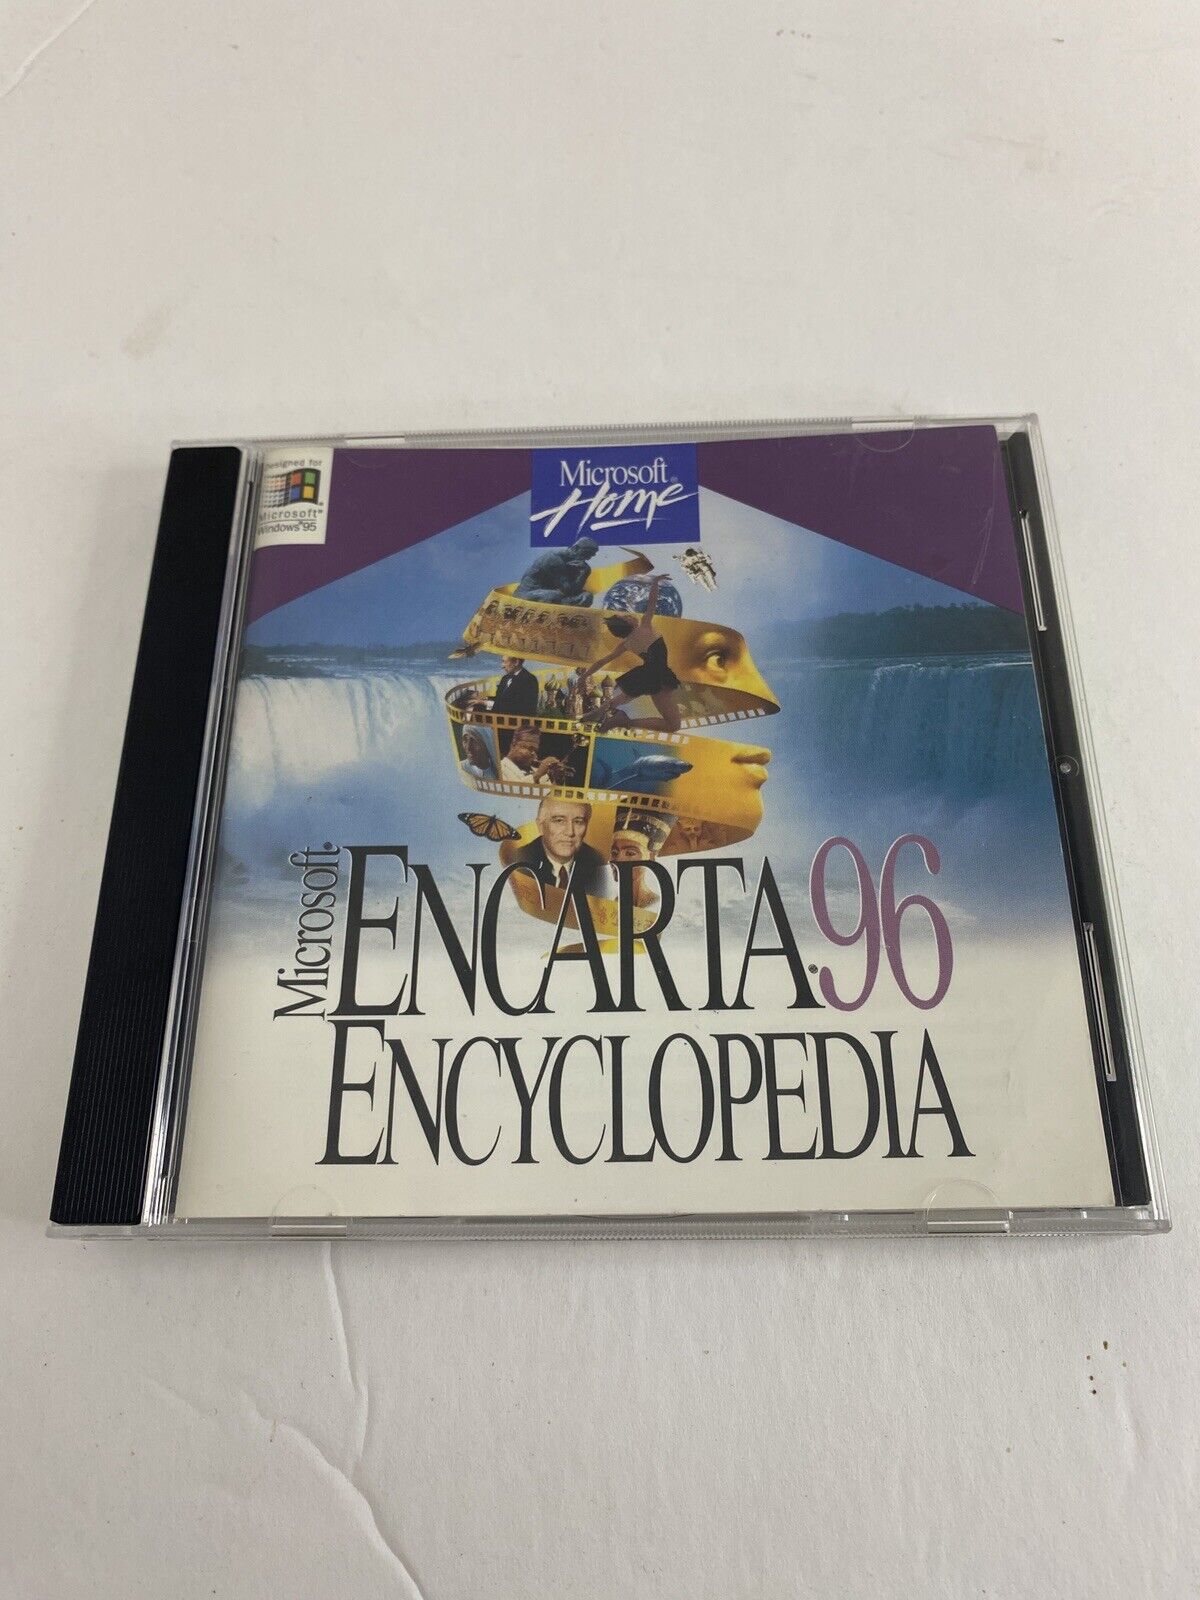 Microsoft Encarta 96 Encyclopedia For Windows 95 With CD Key